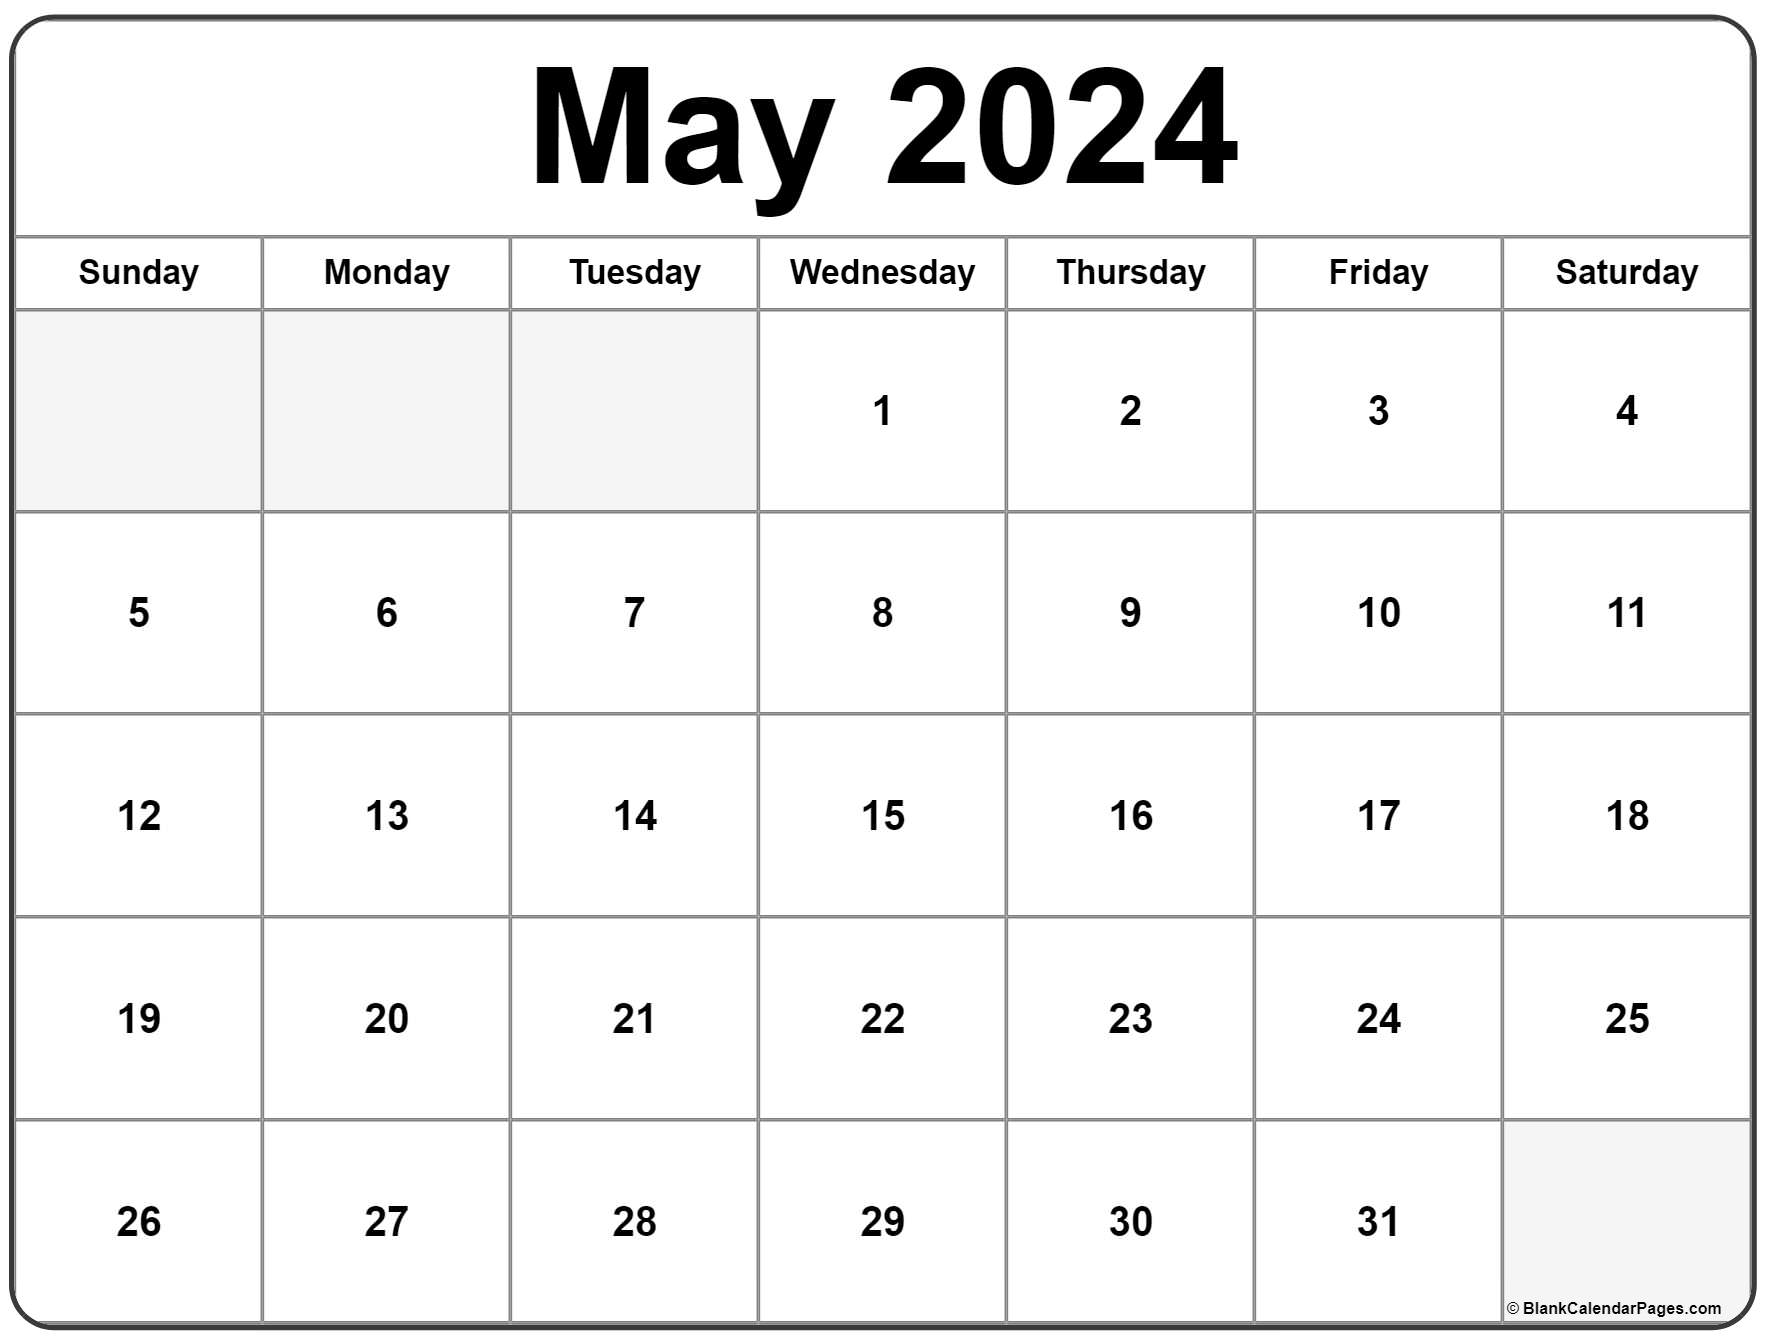 May 2024 Calendar Printable - Printable Calendar